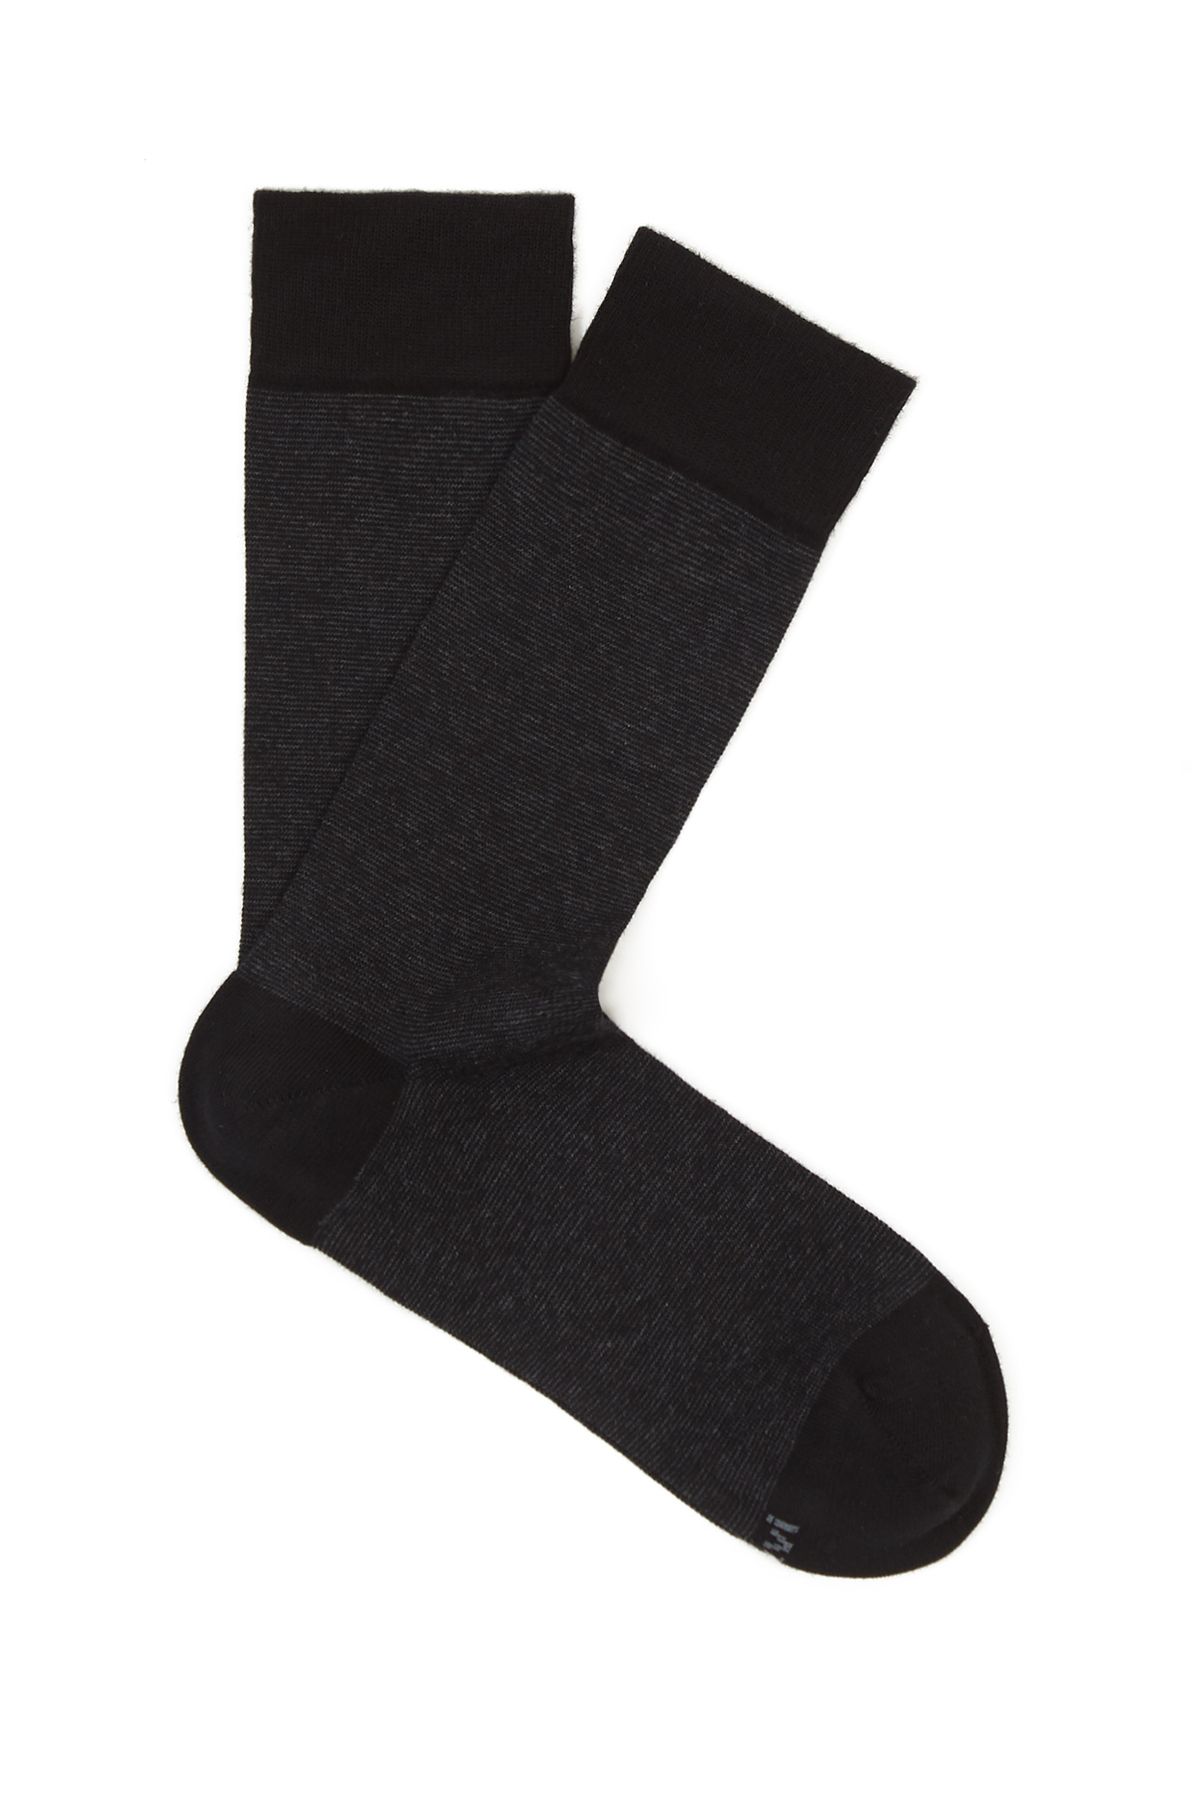 Mavi Siyah Soket Çorap 092026-900